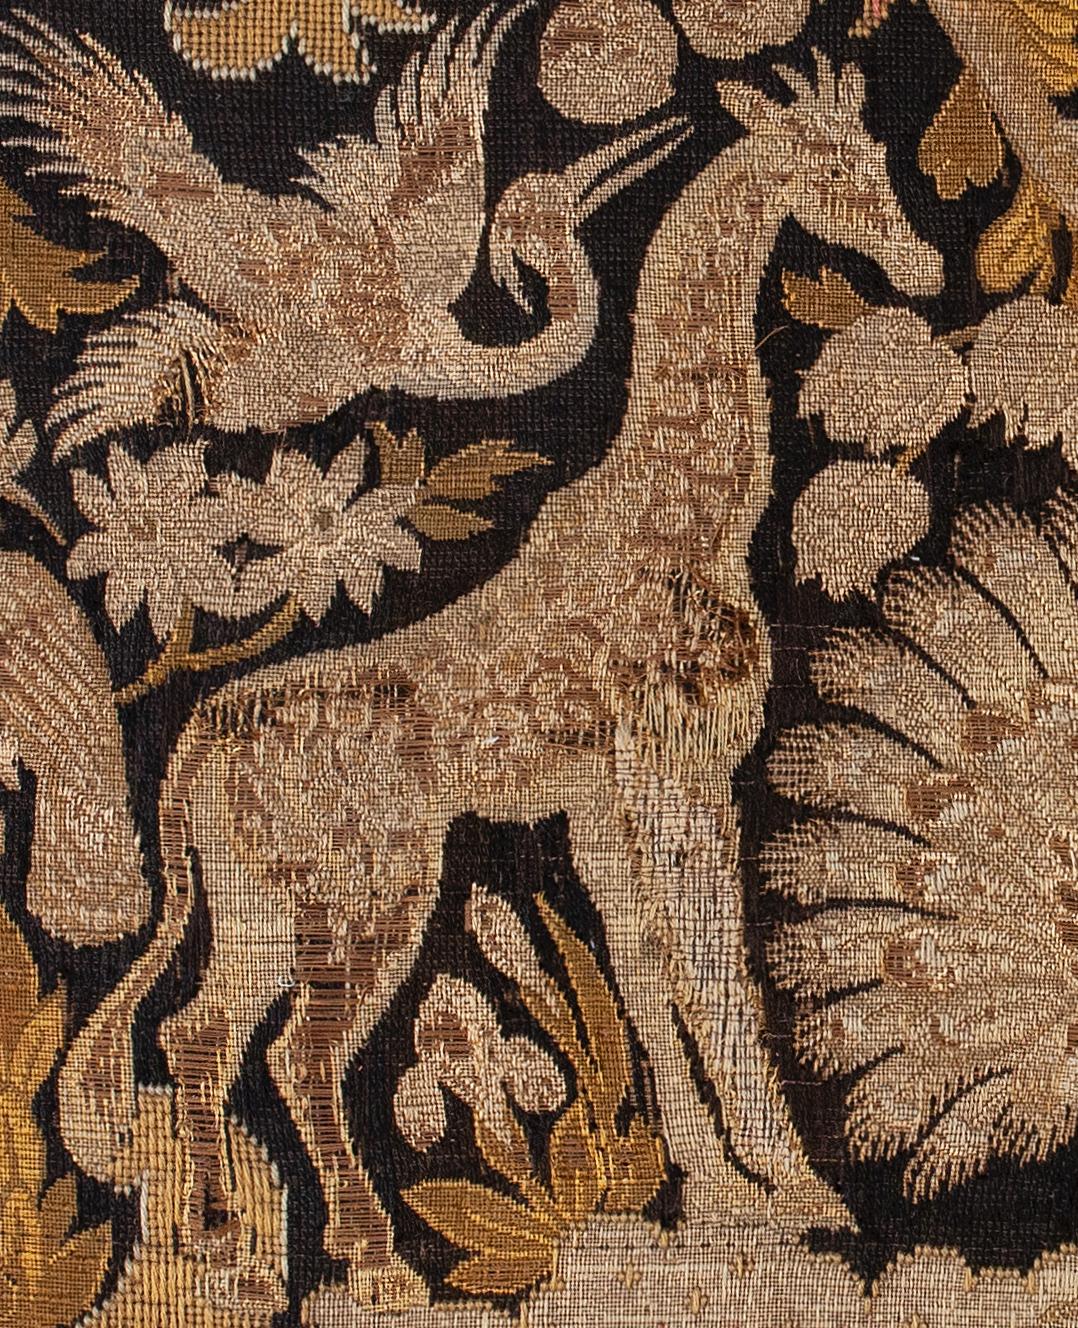 Tapestry Peacock, Girafe, Lion, Deer, Exotic Birds Floral Folk Naive For Sale 1